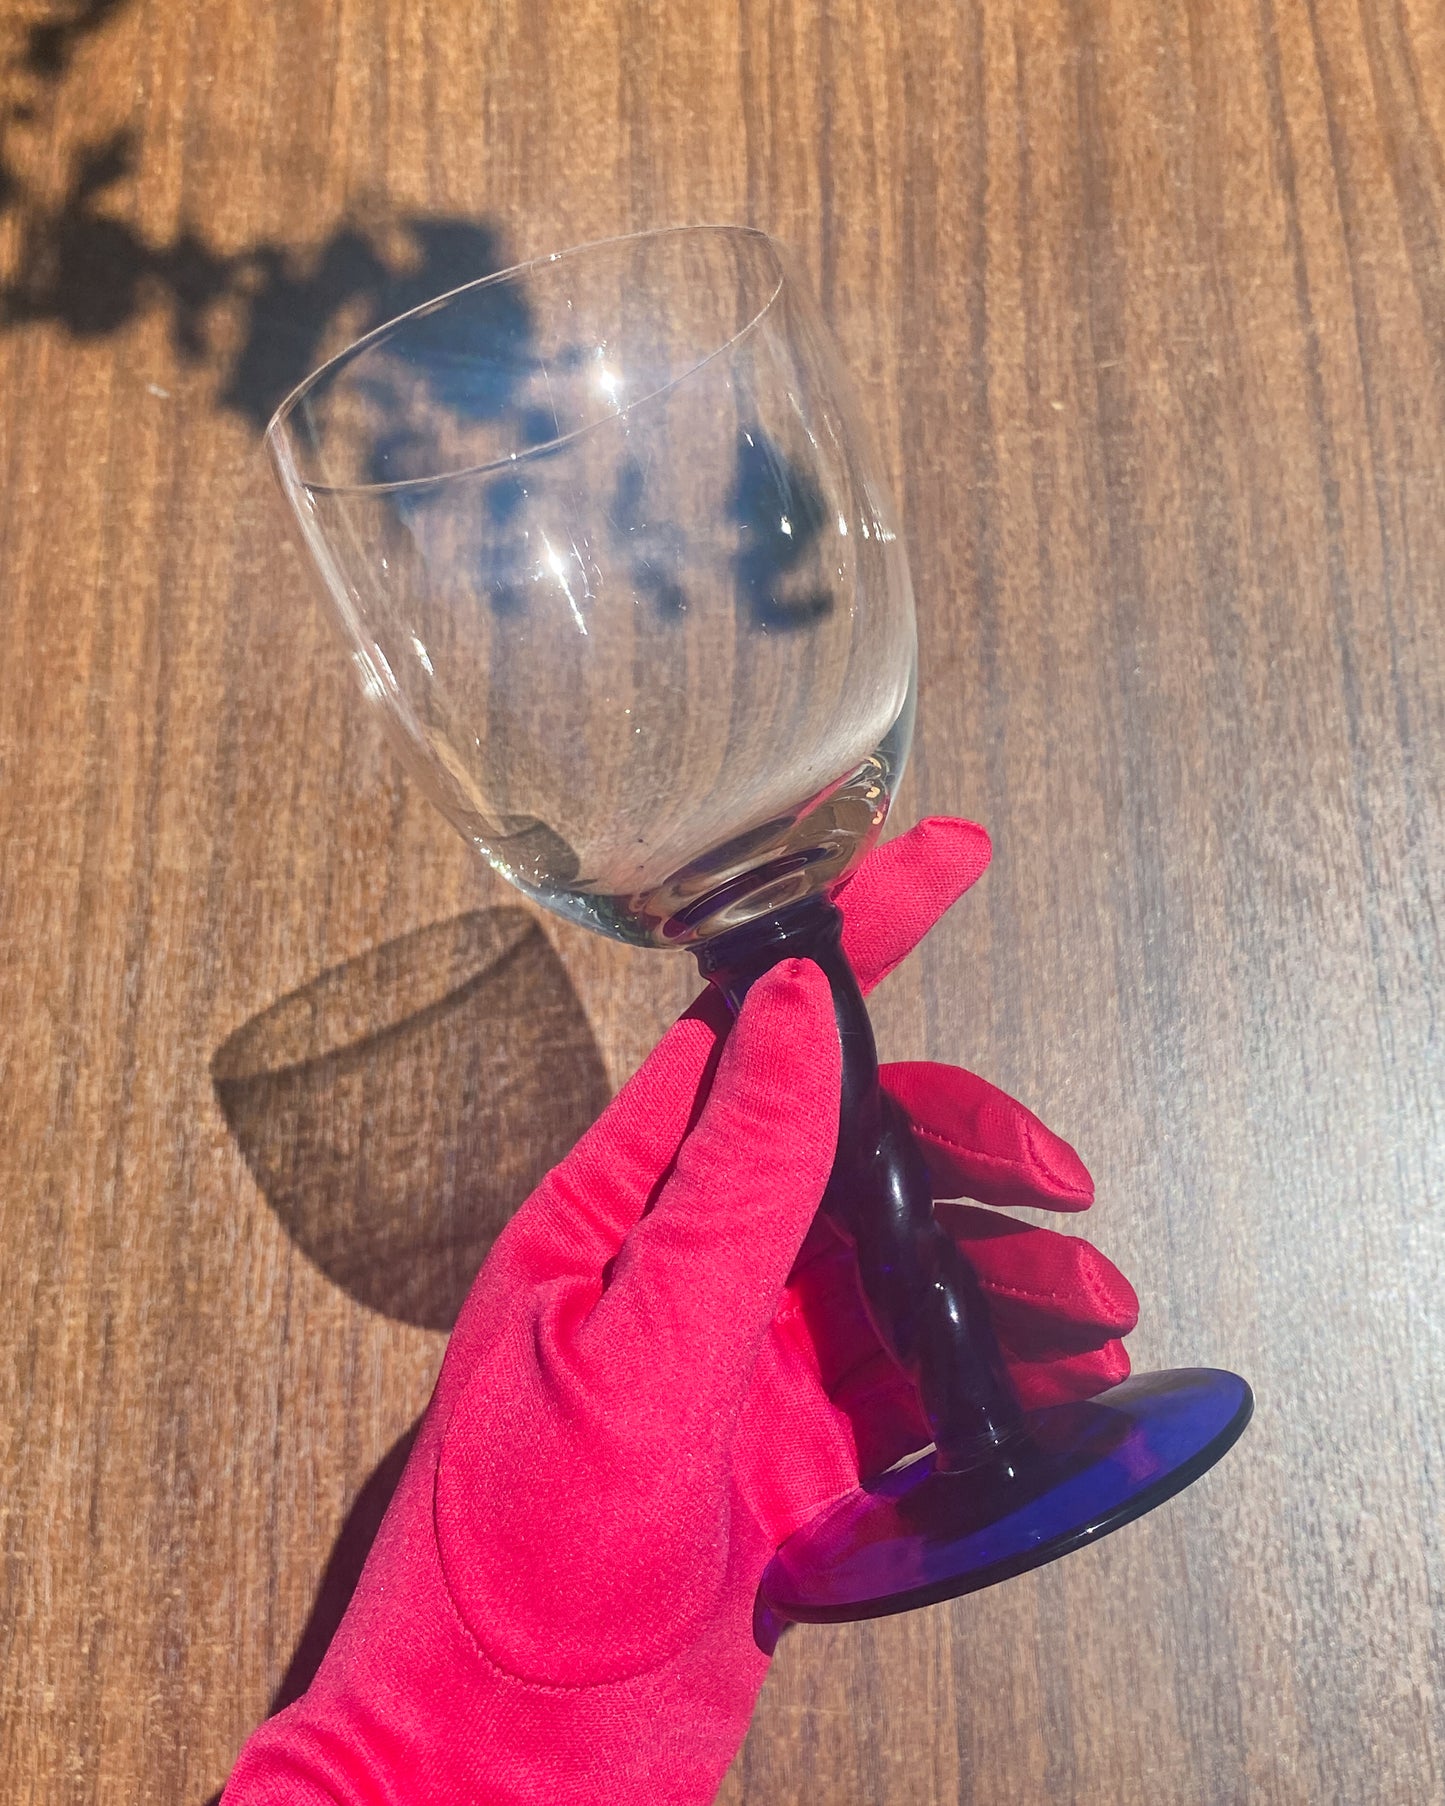 Vintage Blue Twisted Stem Wine Glasses | Set of 2